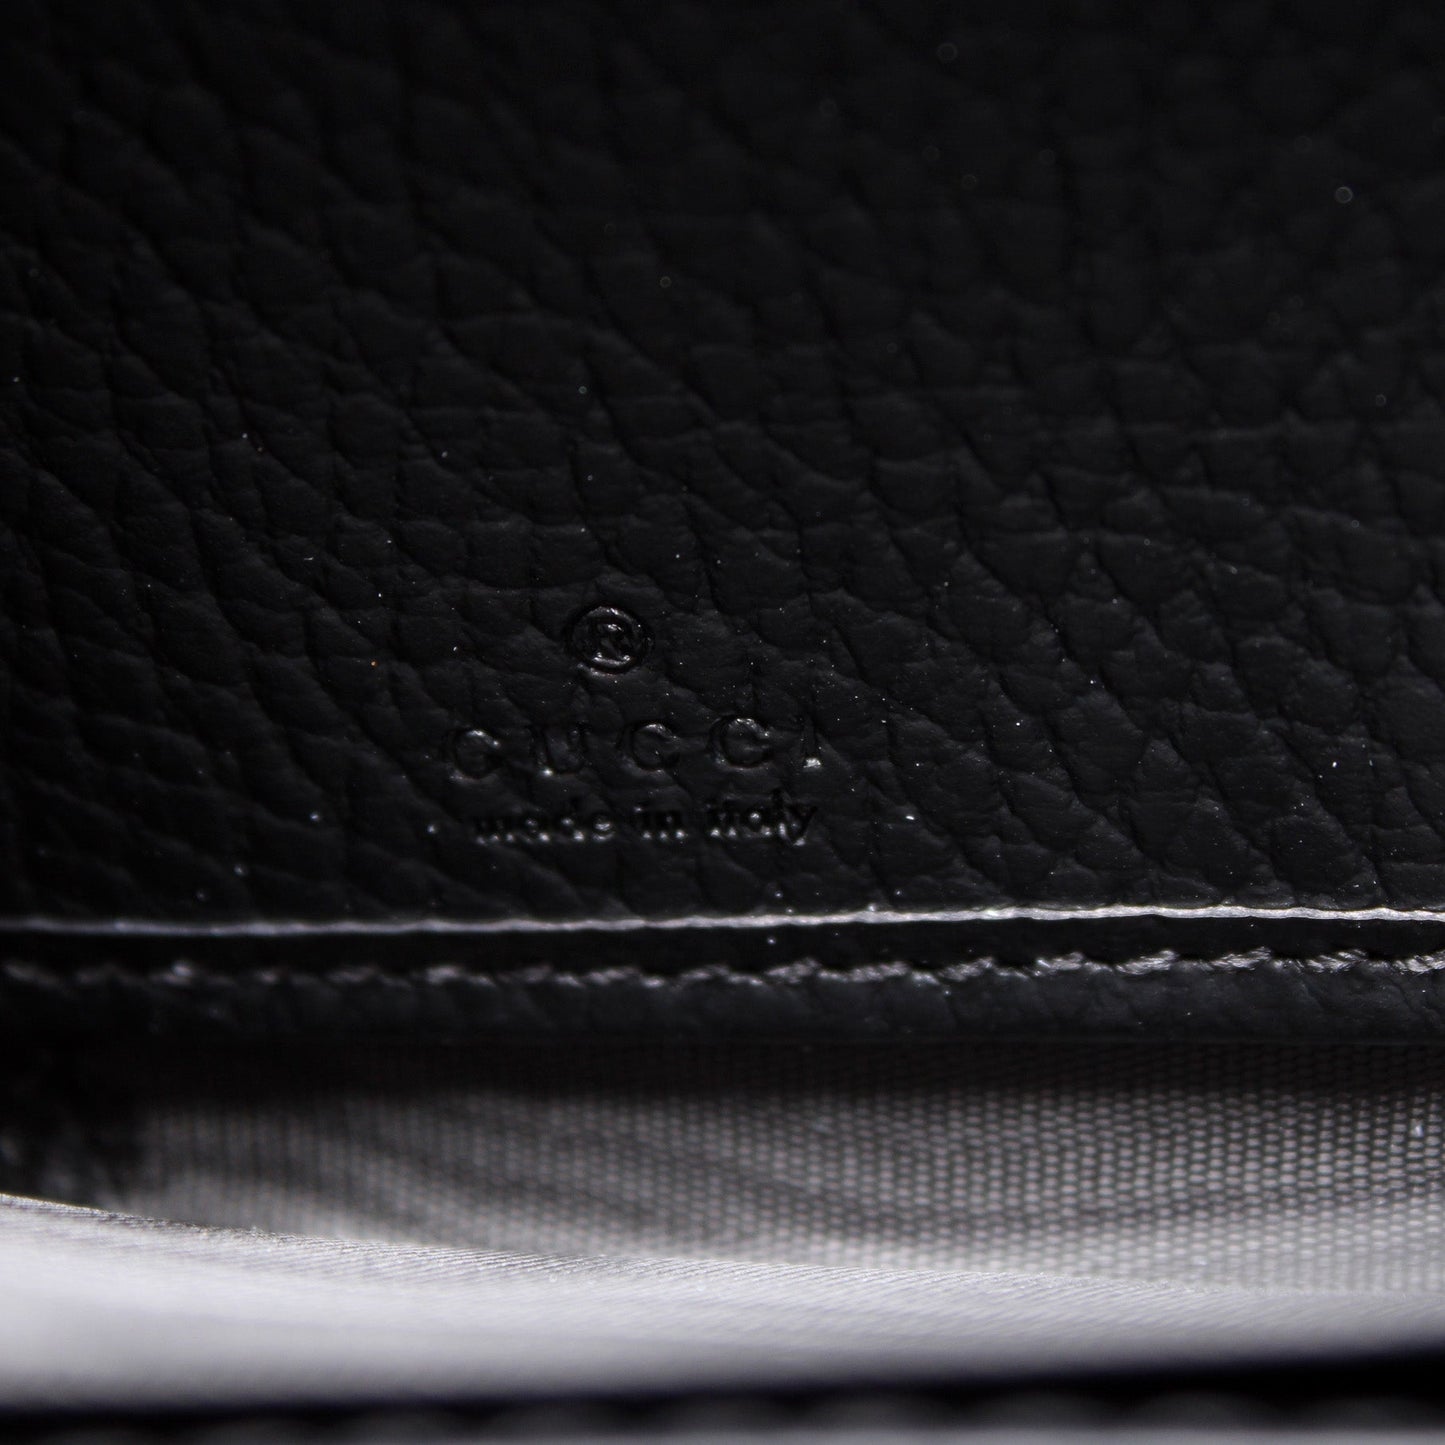 456117 Gucci Marmont Leather Zip Around Wallet